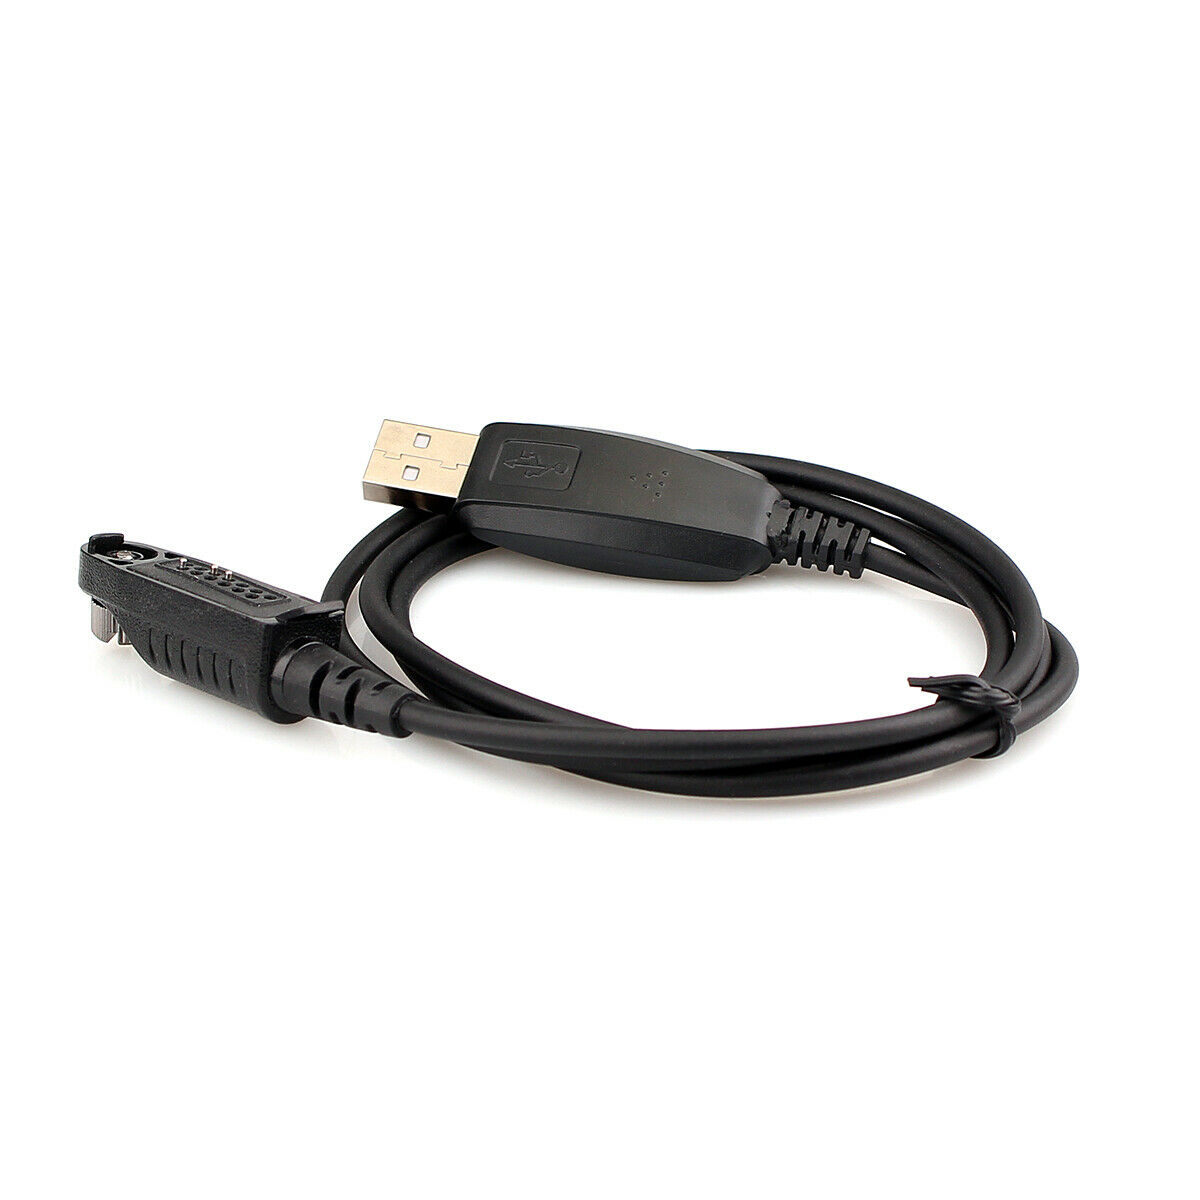 Original USB Programming Cable for Retevis RT82 DMR Radio